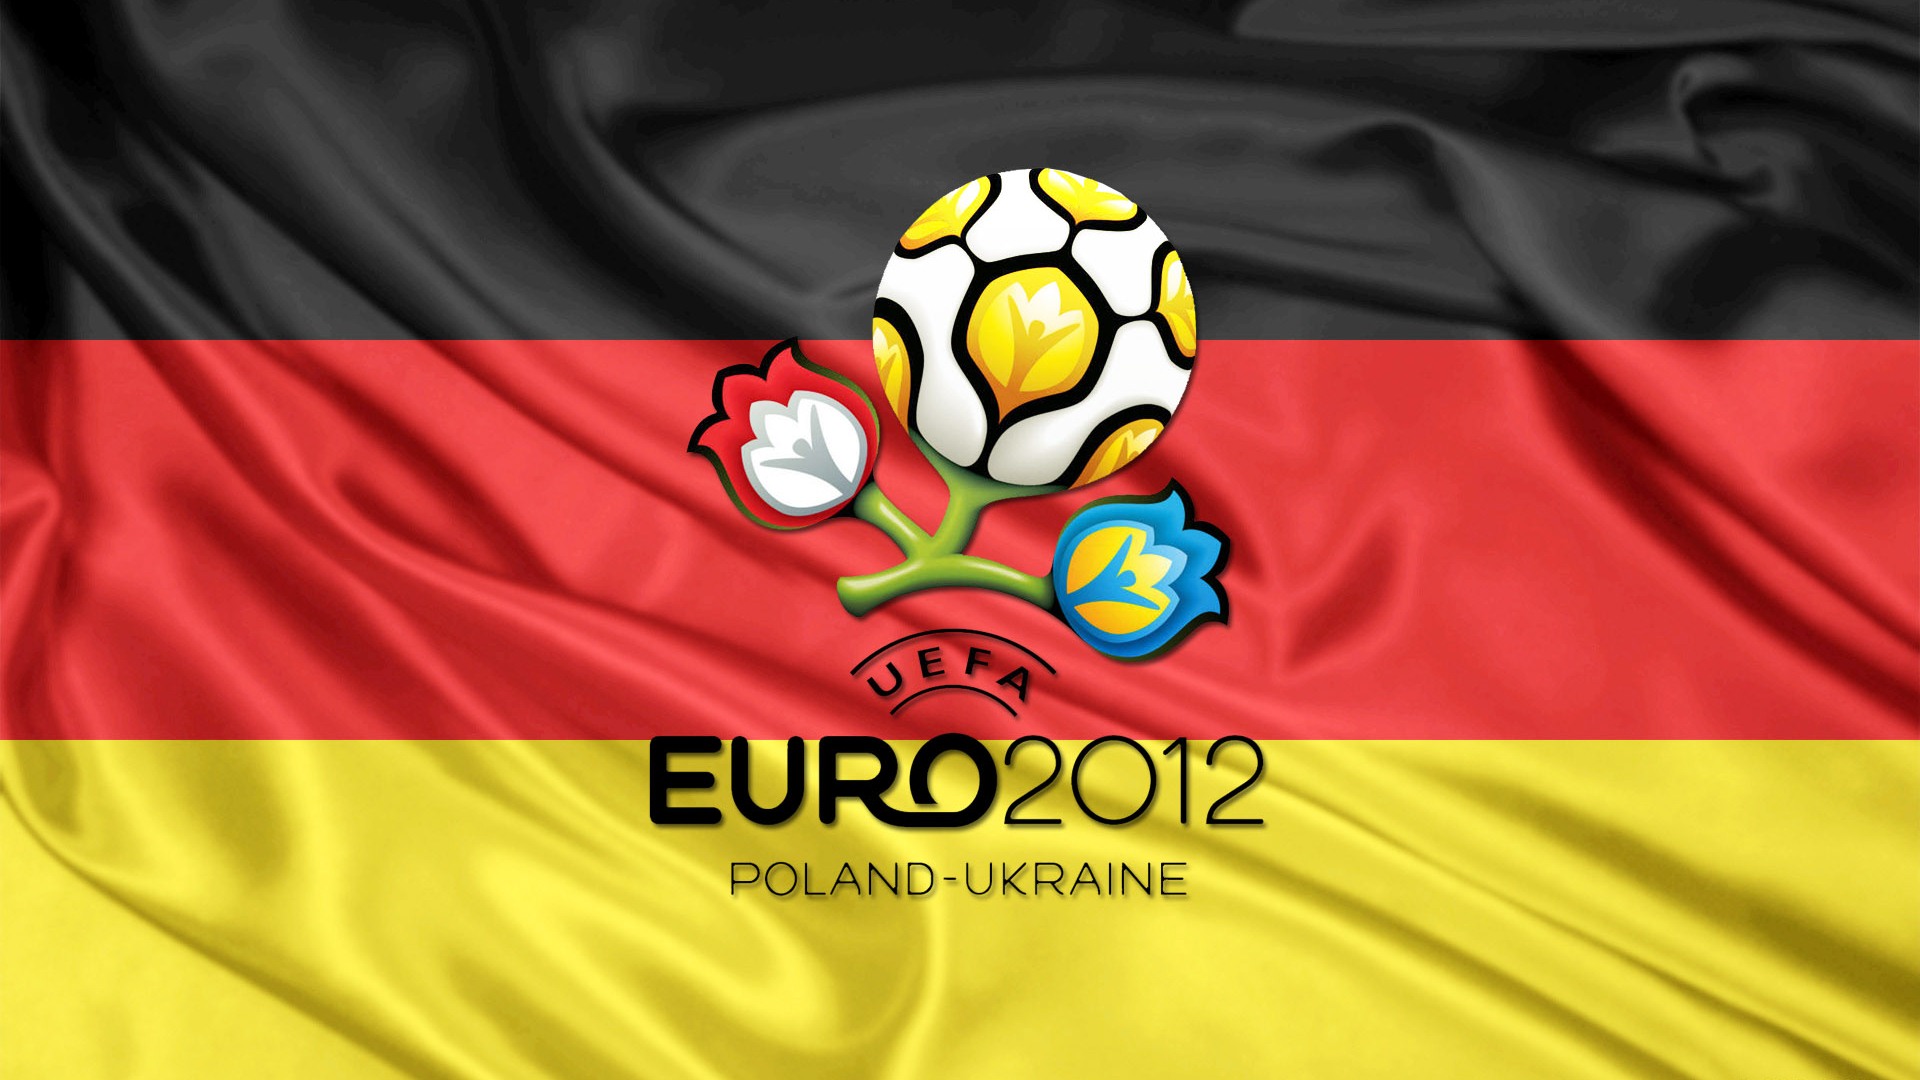 UEFA EURO 2012 欧洲足球锦标赛 高清壁纸(一)14 - 1920x1080